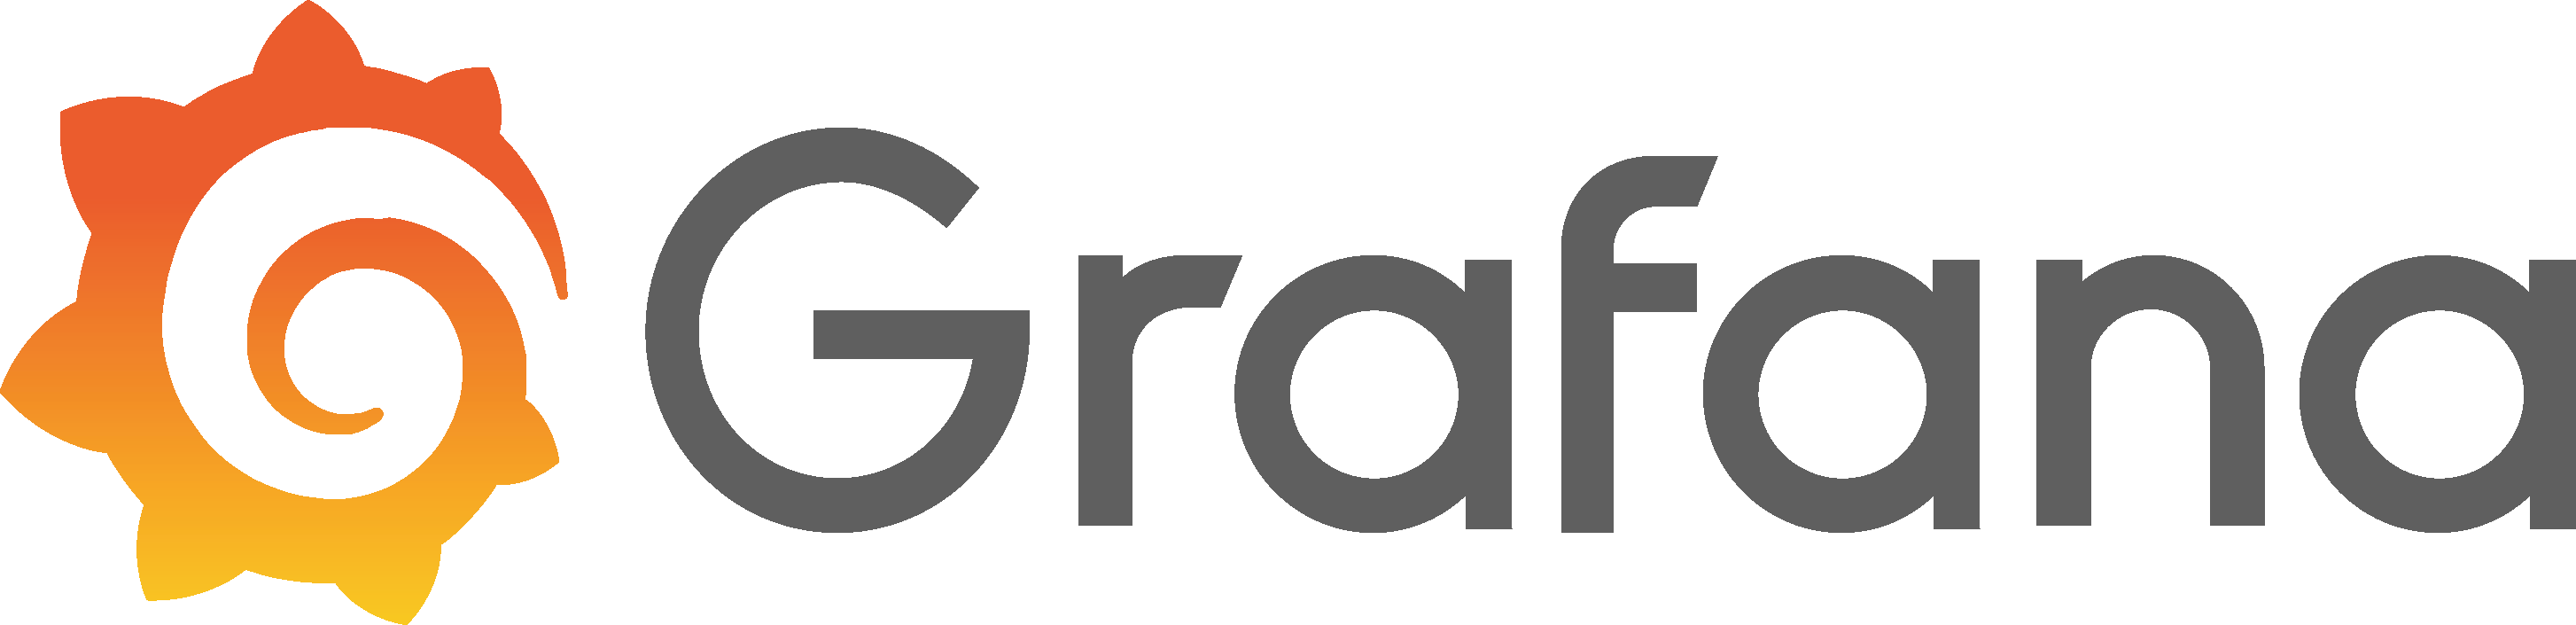 Grafana Logo Download Vector